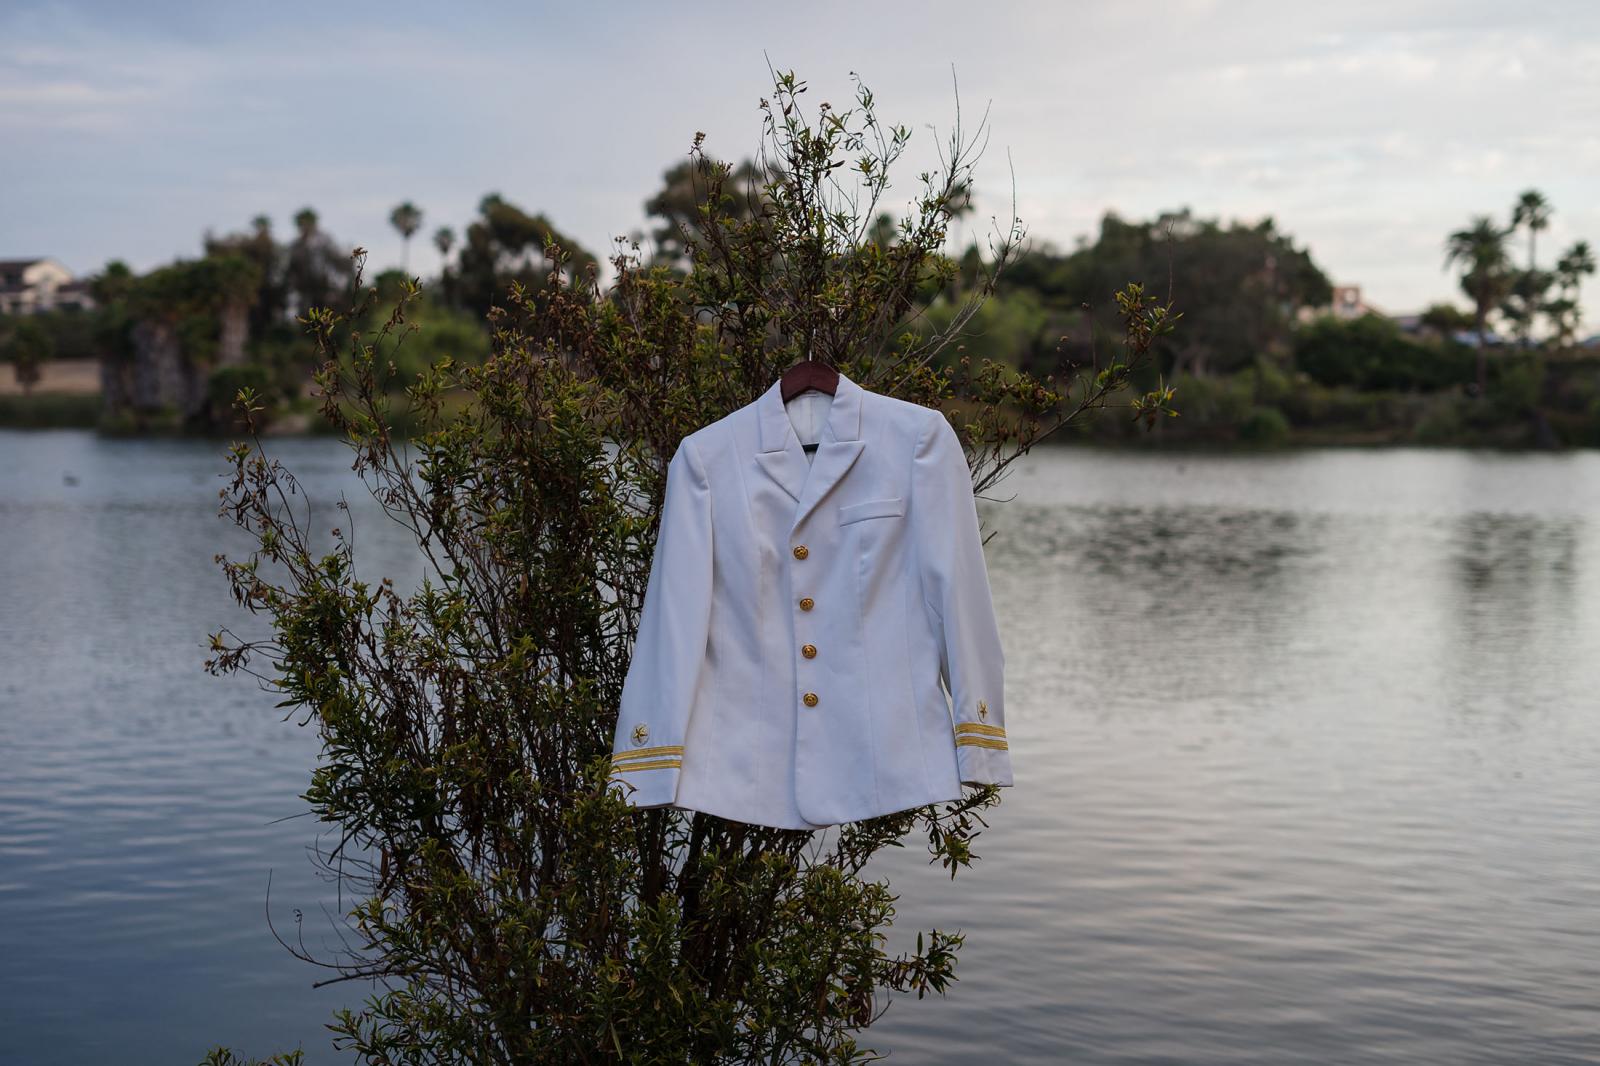 Image from United States - Lyla Kohistany's US Navy uniform jacket was worn...